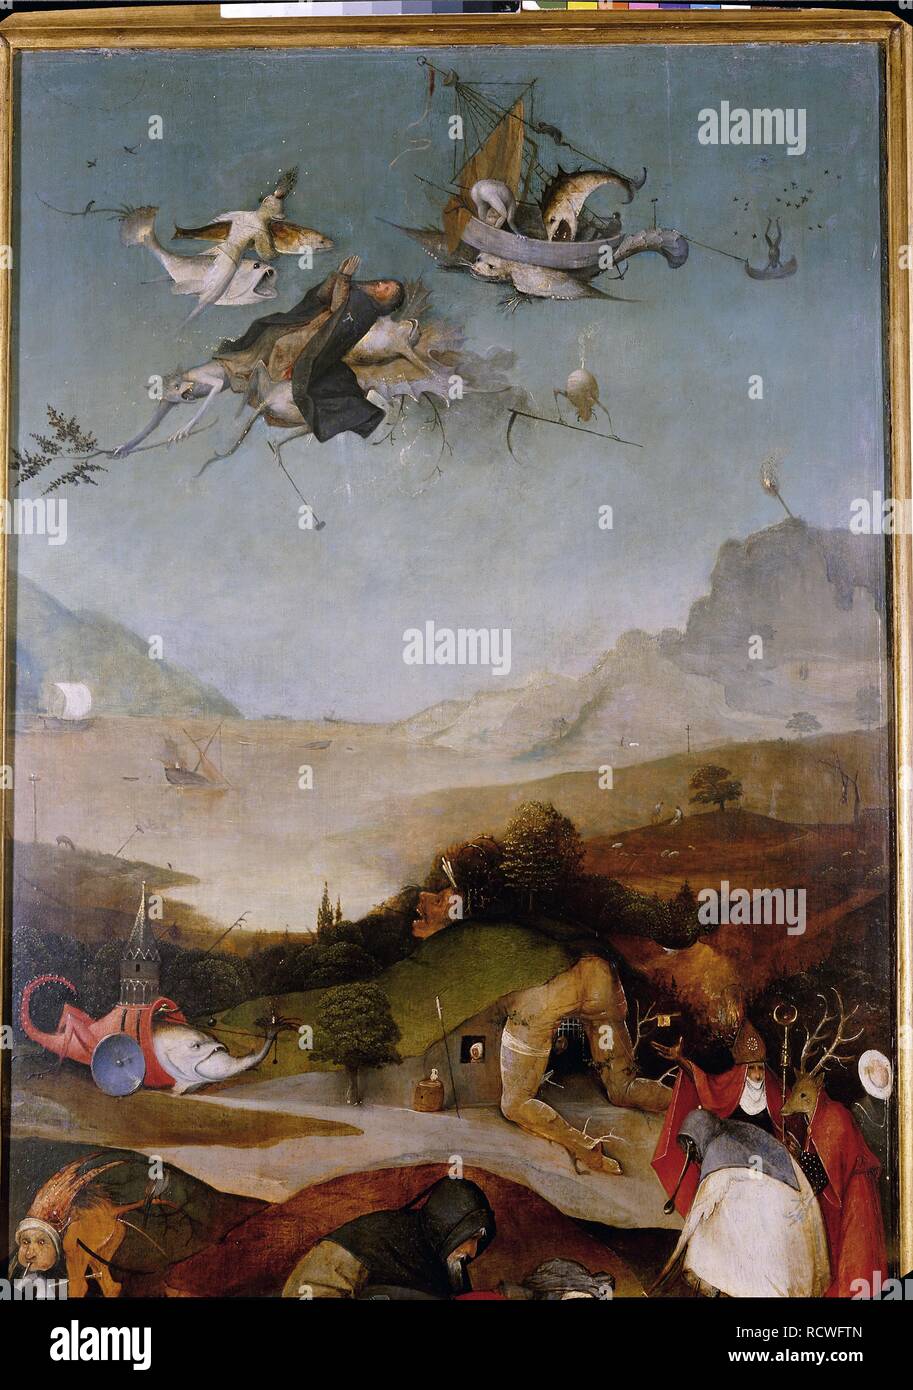 The Temptation of Saint Anthony (Detail of left wing of a triptych). Museum: Museu Nacional de Arte Antiga, Lisbon. Author: BOSCH, HIERONYMUS. Stock Photo